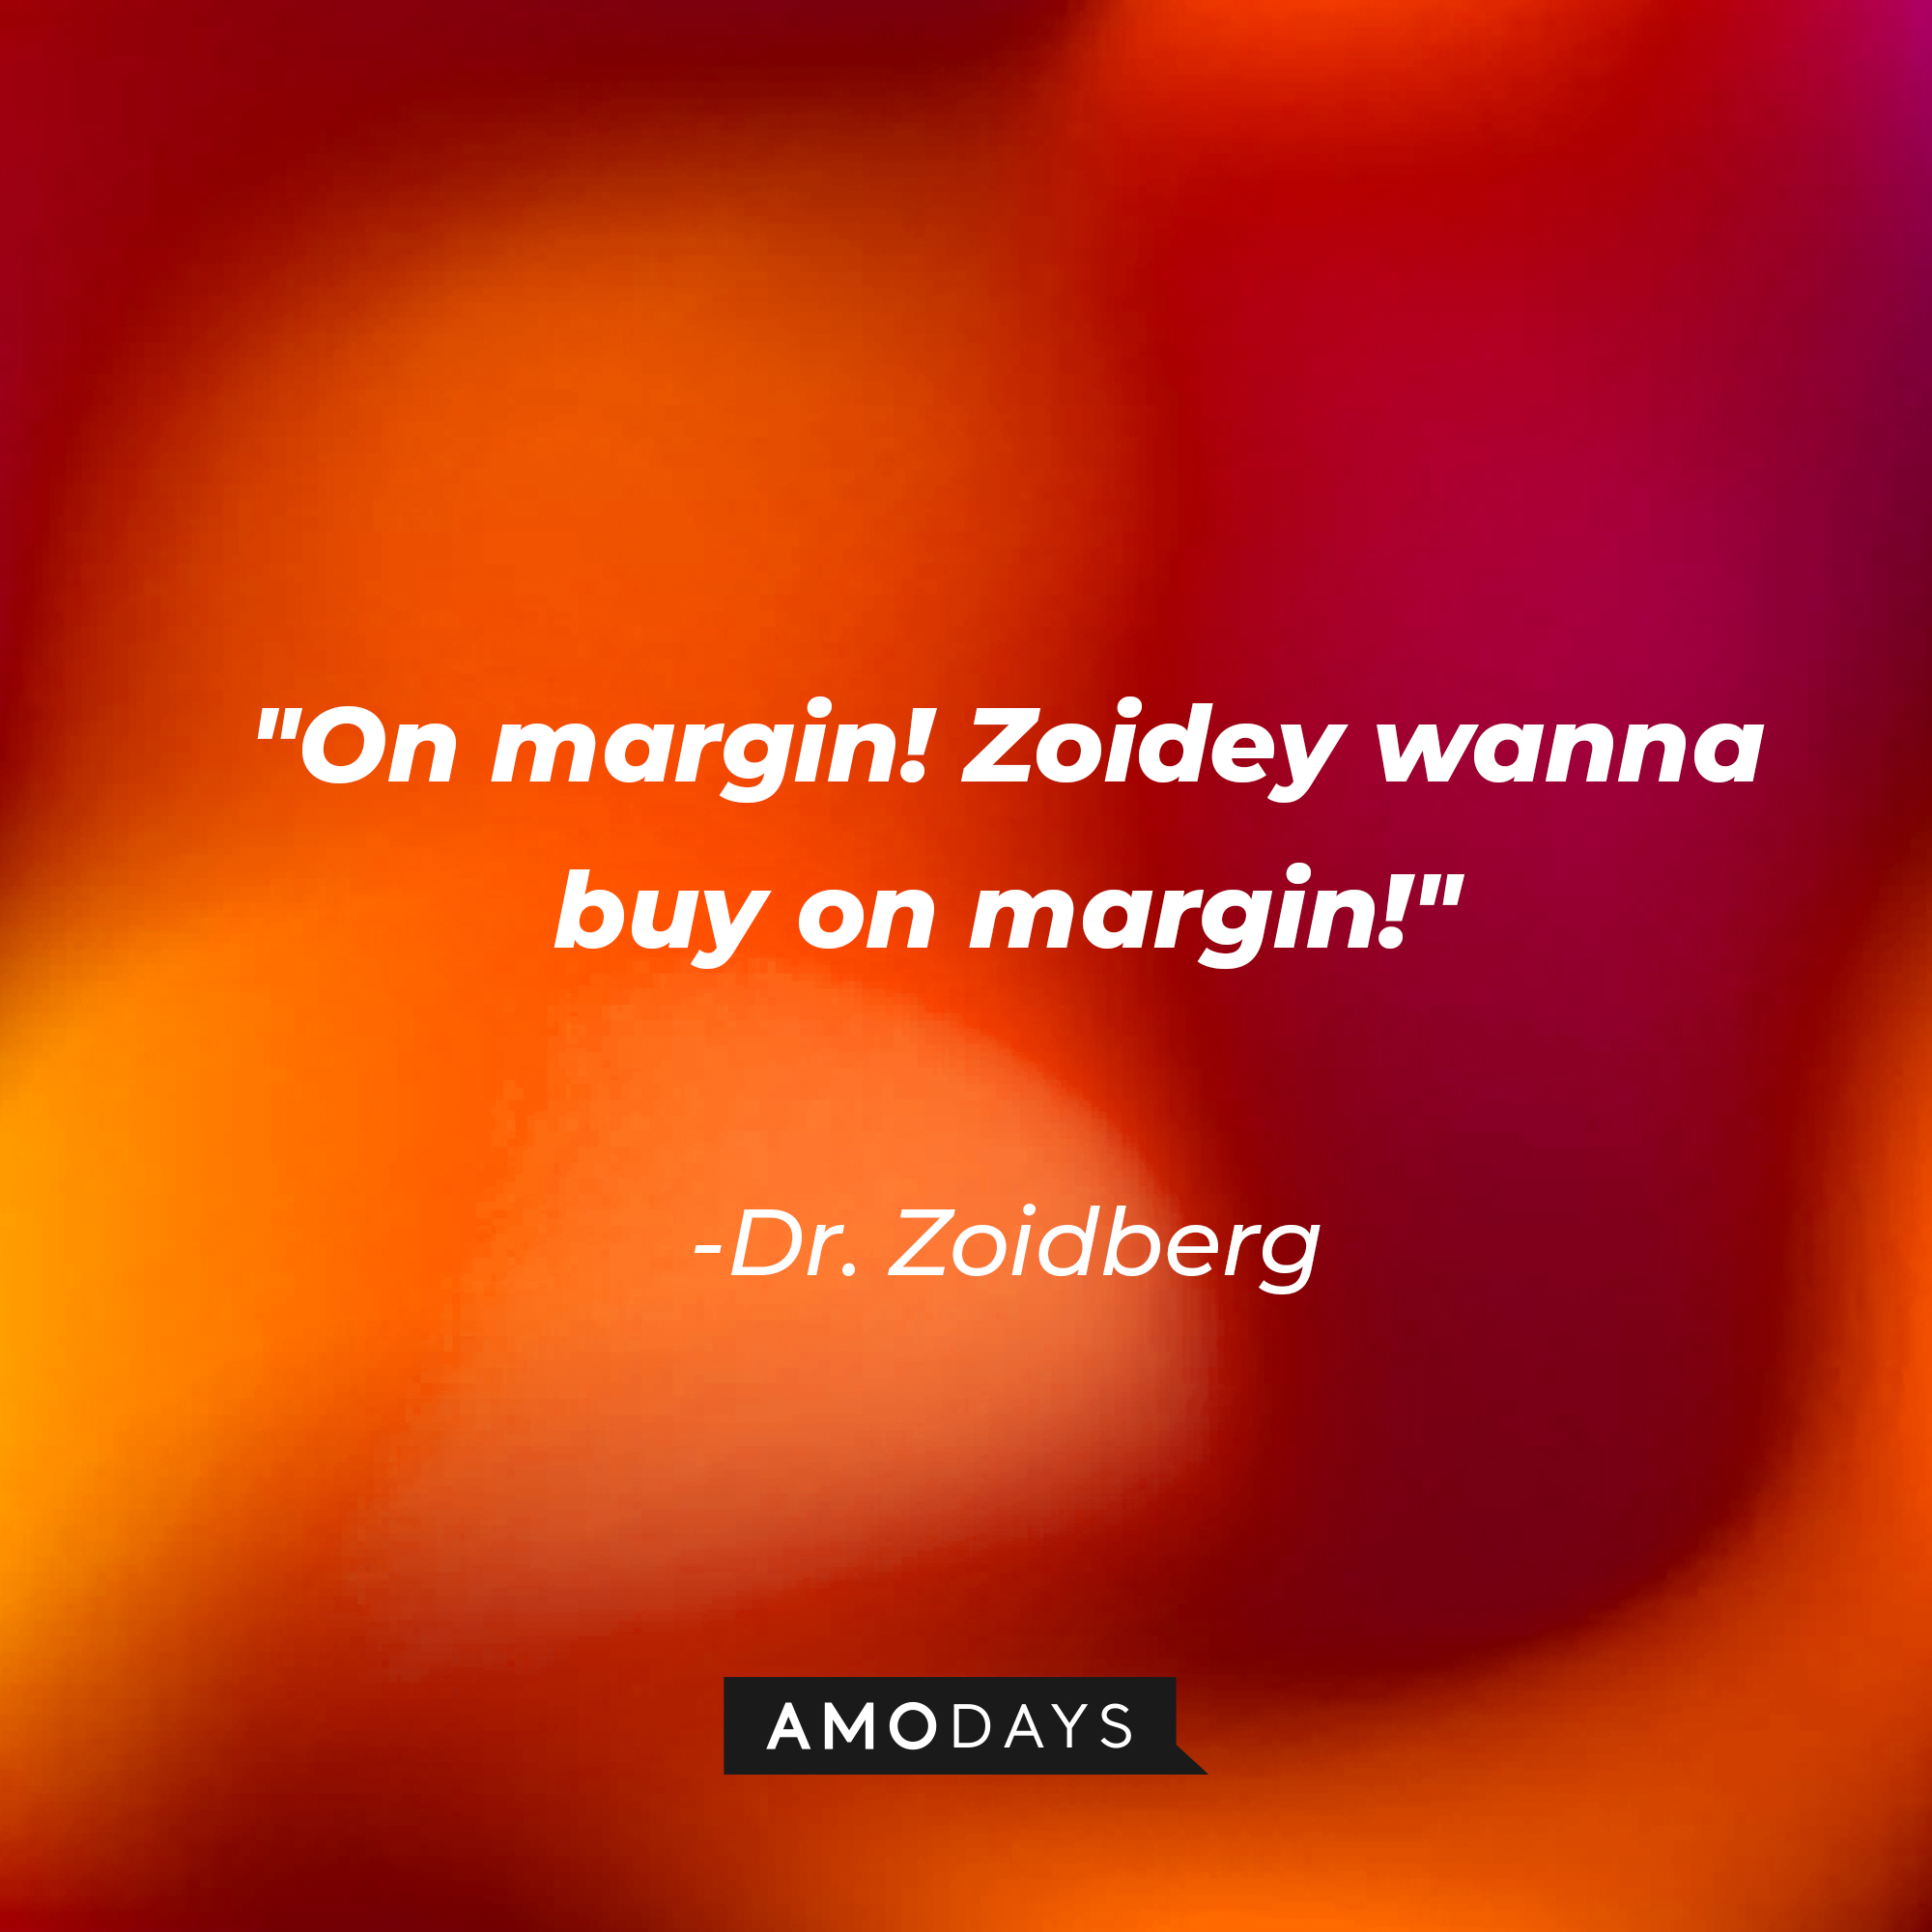 Dr. Zoidberg's quote: "On margin! Zoidey wanna buy on margin!" | Source: AmoDays